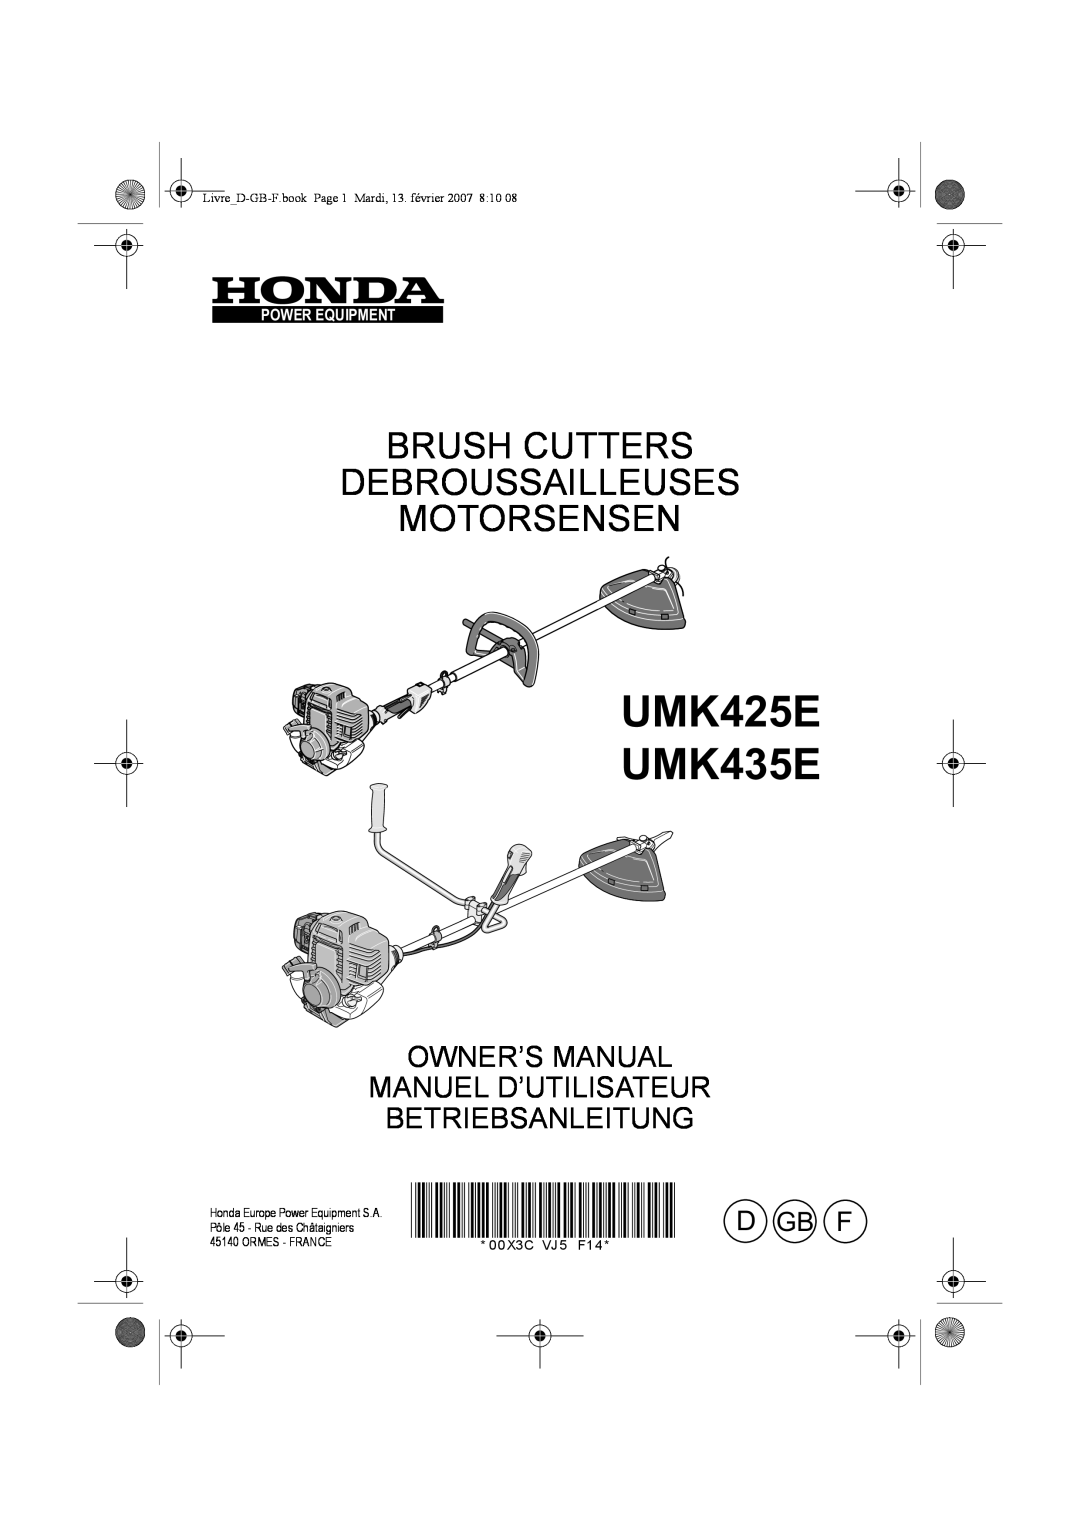 Honda Power Equipment owner manual Brush Cutters Debroussailleuses Motorsensen, UMK425E UMK435E, D Gb F, 00X3C VJ 